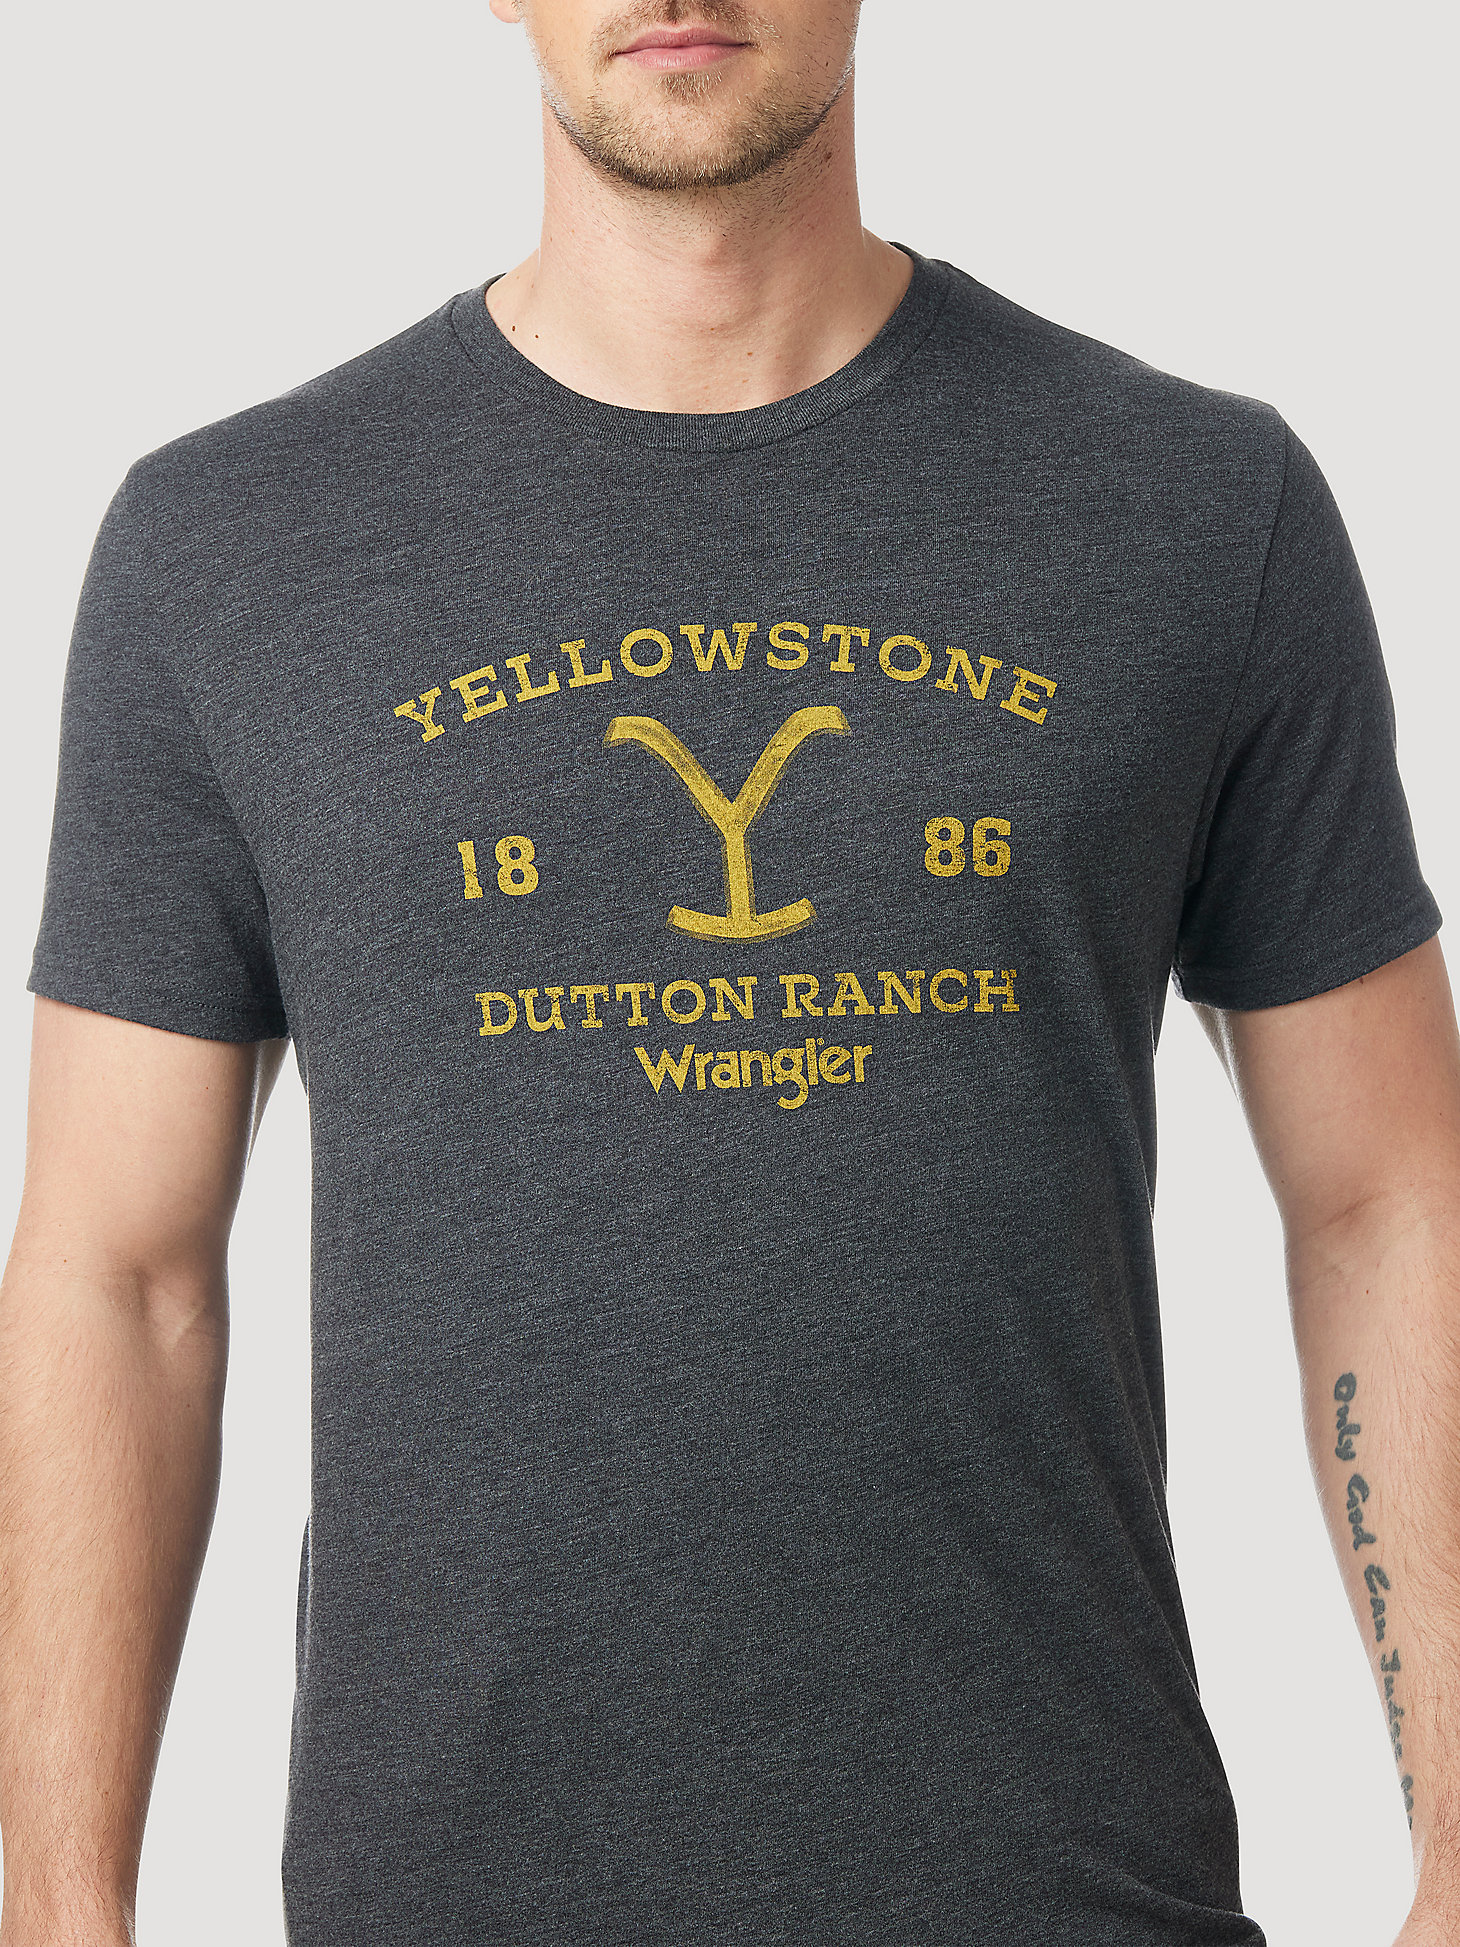 Wrangler x Yellowstone Men's 1886 T-Shirt in Caviar Heather alternative view 2